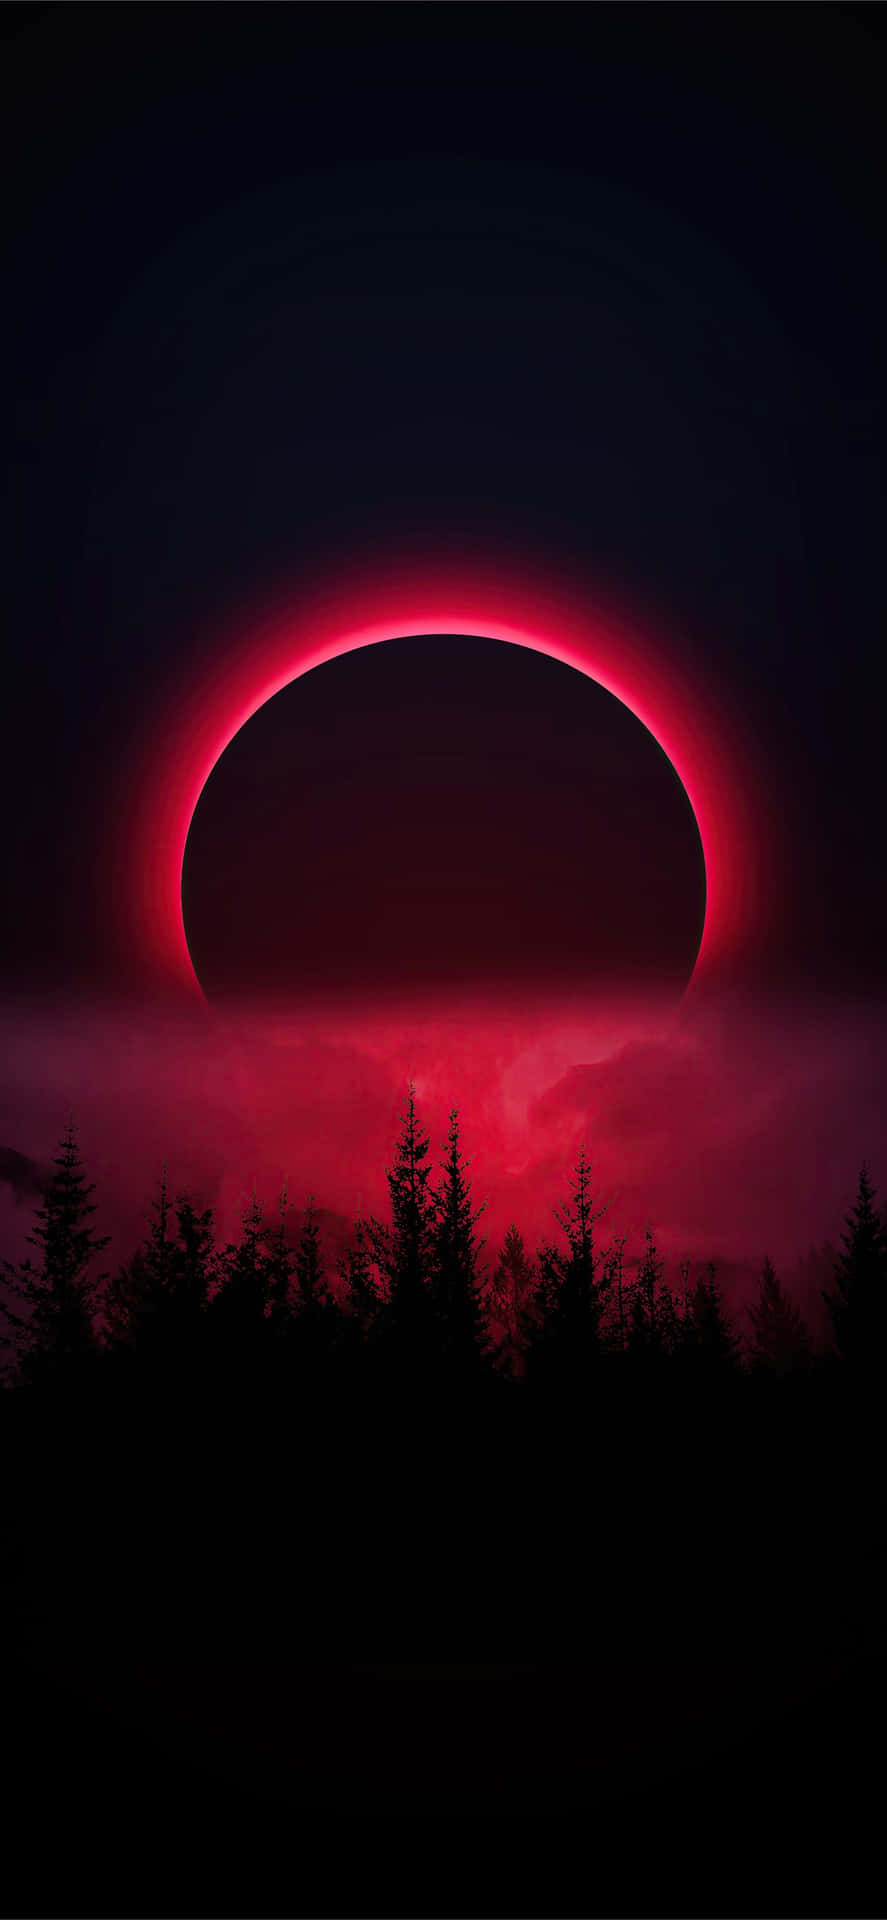 Blood Moon Eclipse Background